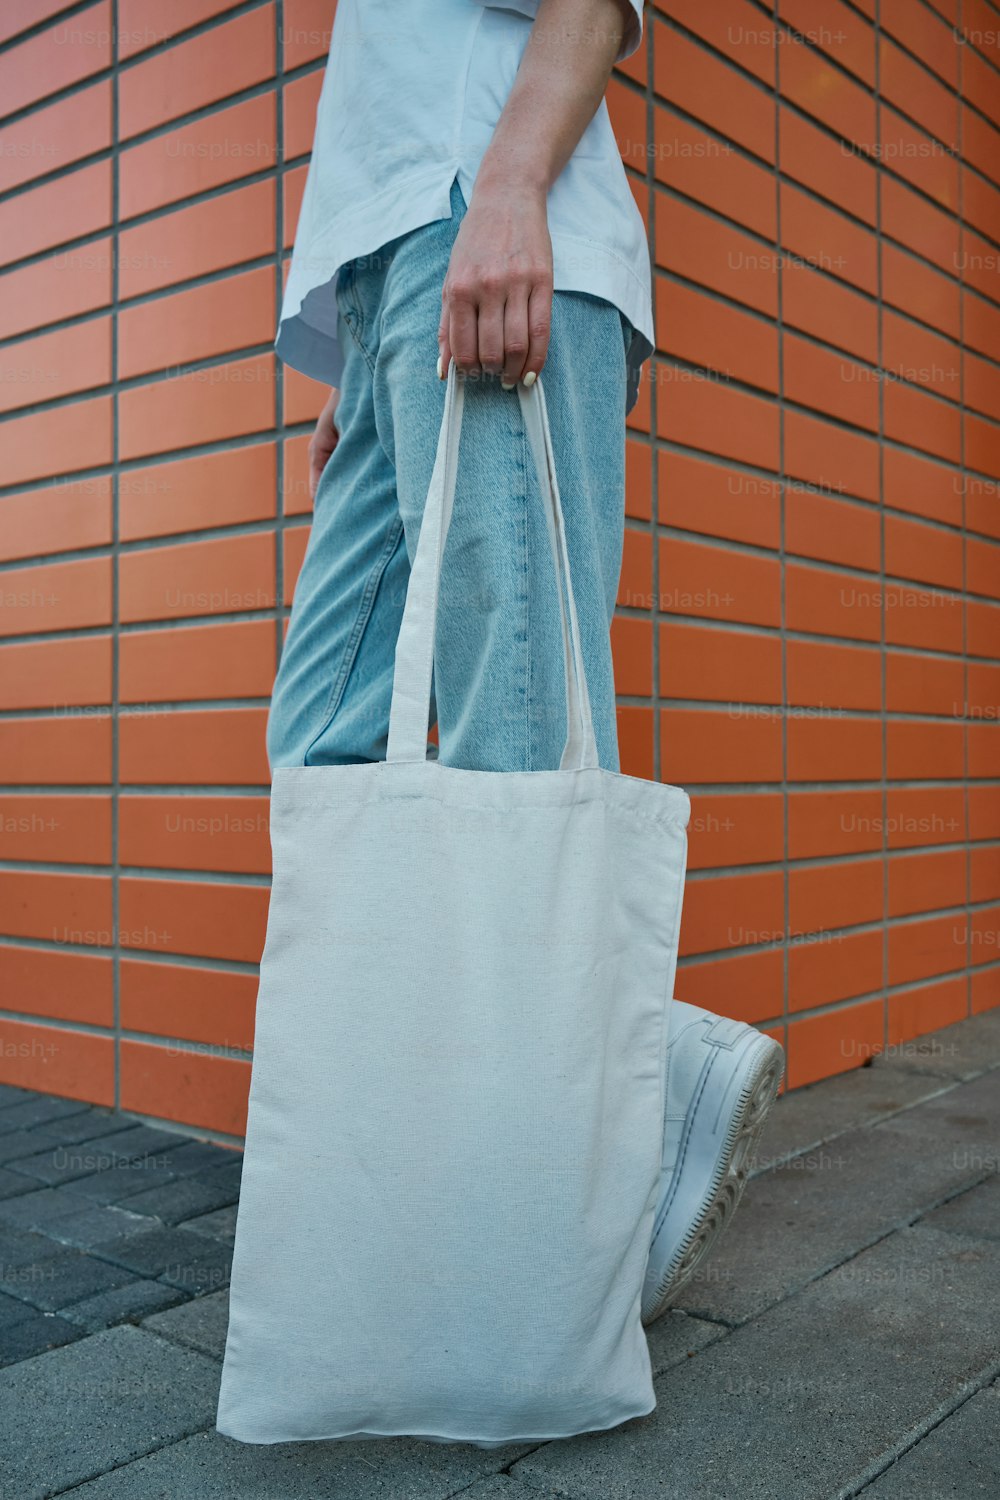 una persona che trasporta una borsa bianca su un marciapiede